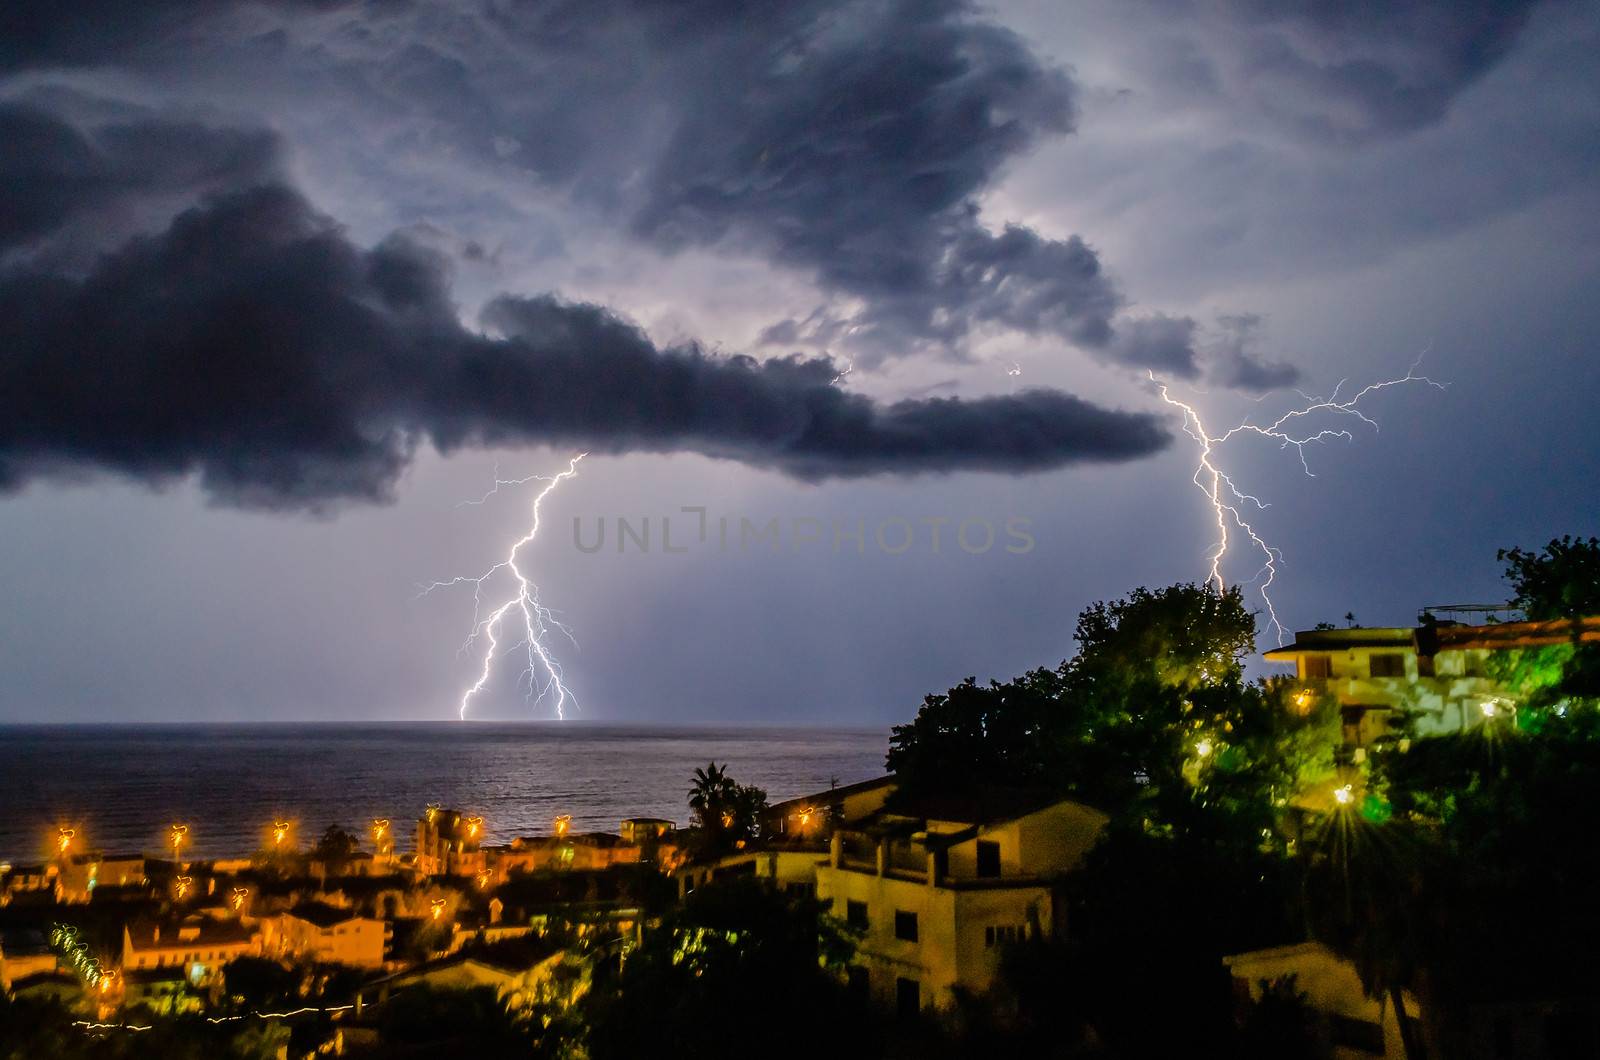 Lightning over the sea, night scene